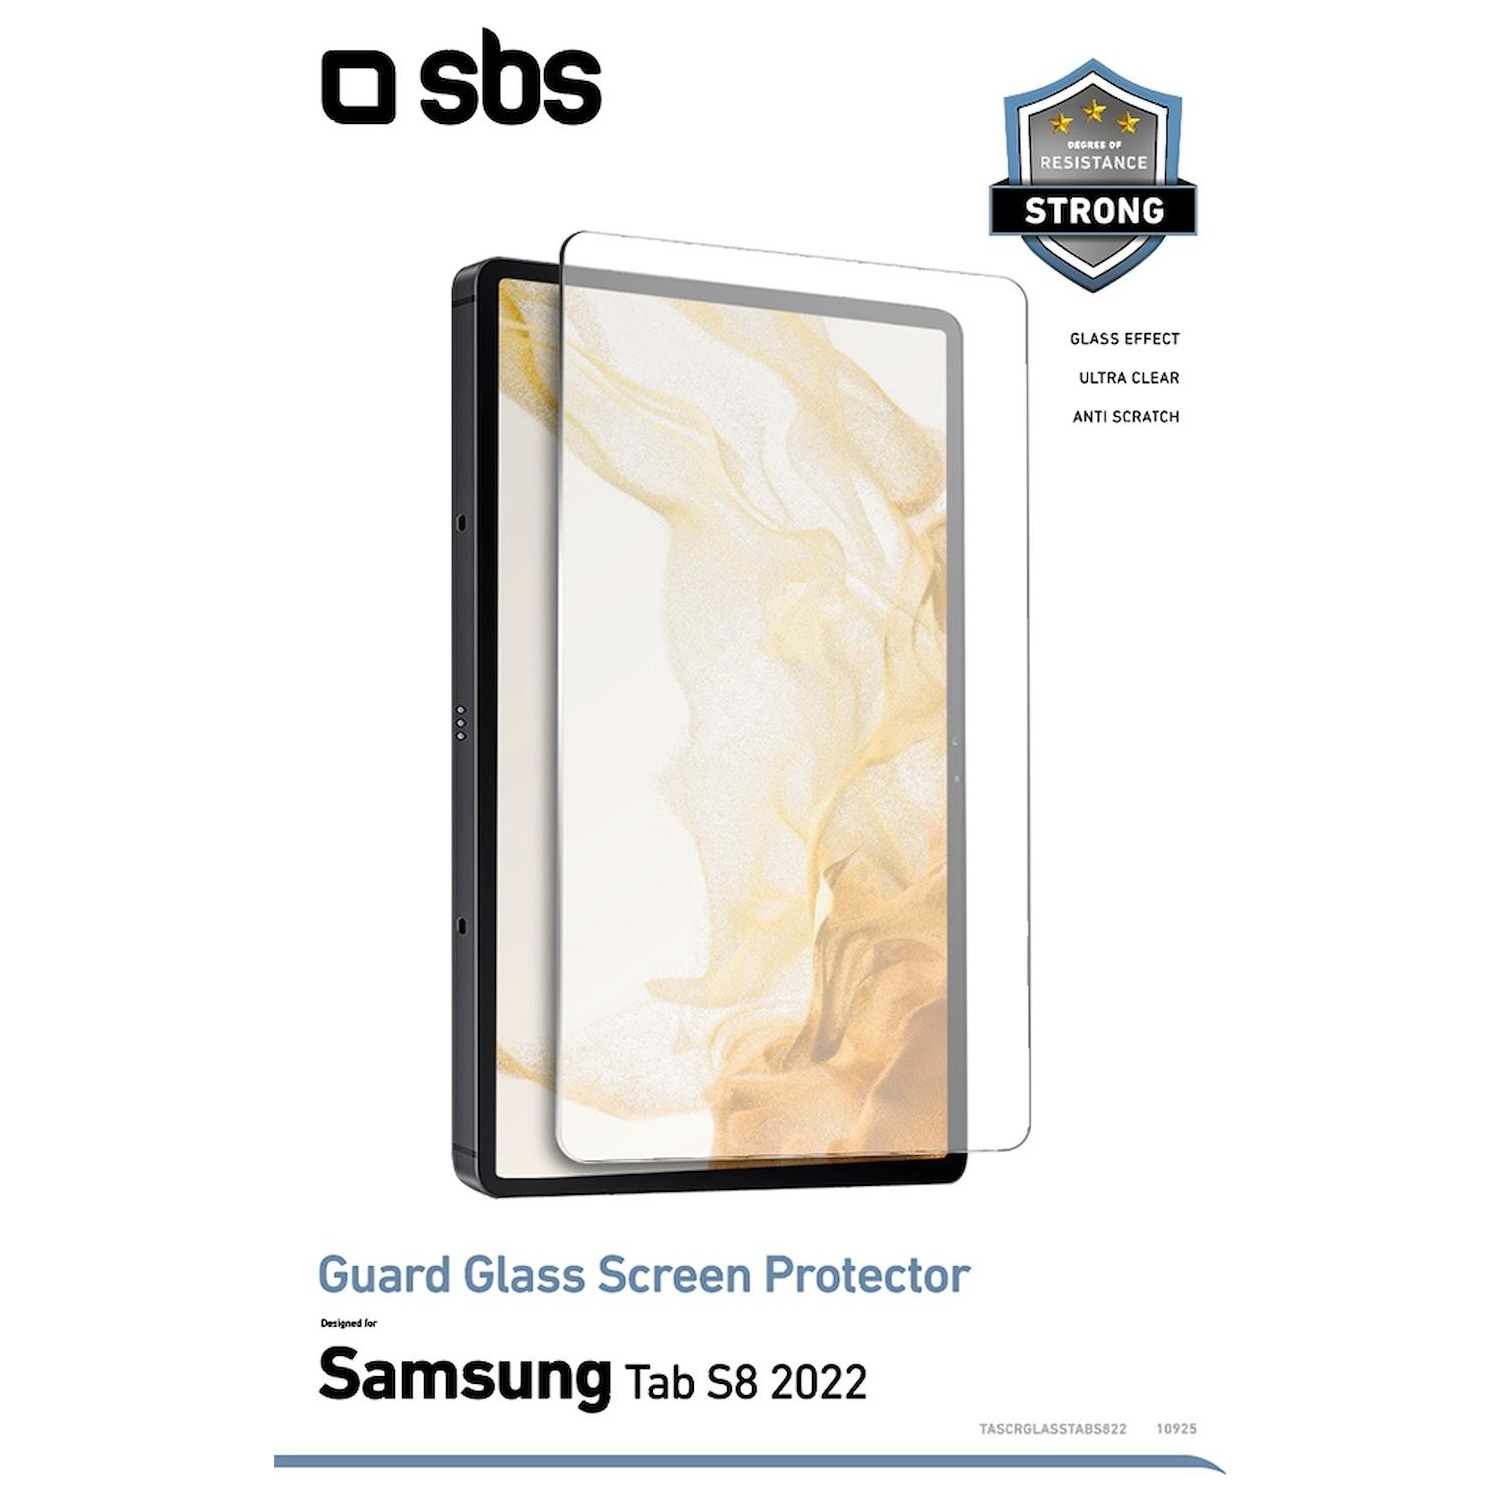 Immagine per Screenglass SBS per Samsung Galaxy Tab S8 2022 da DIMOStore